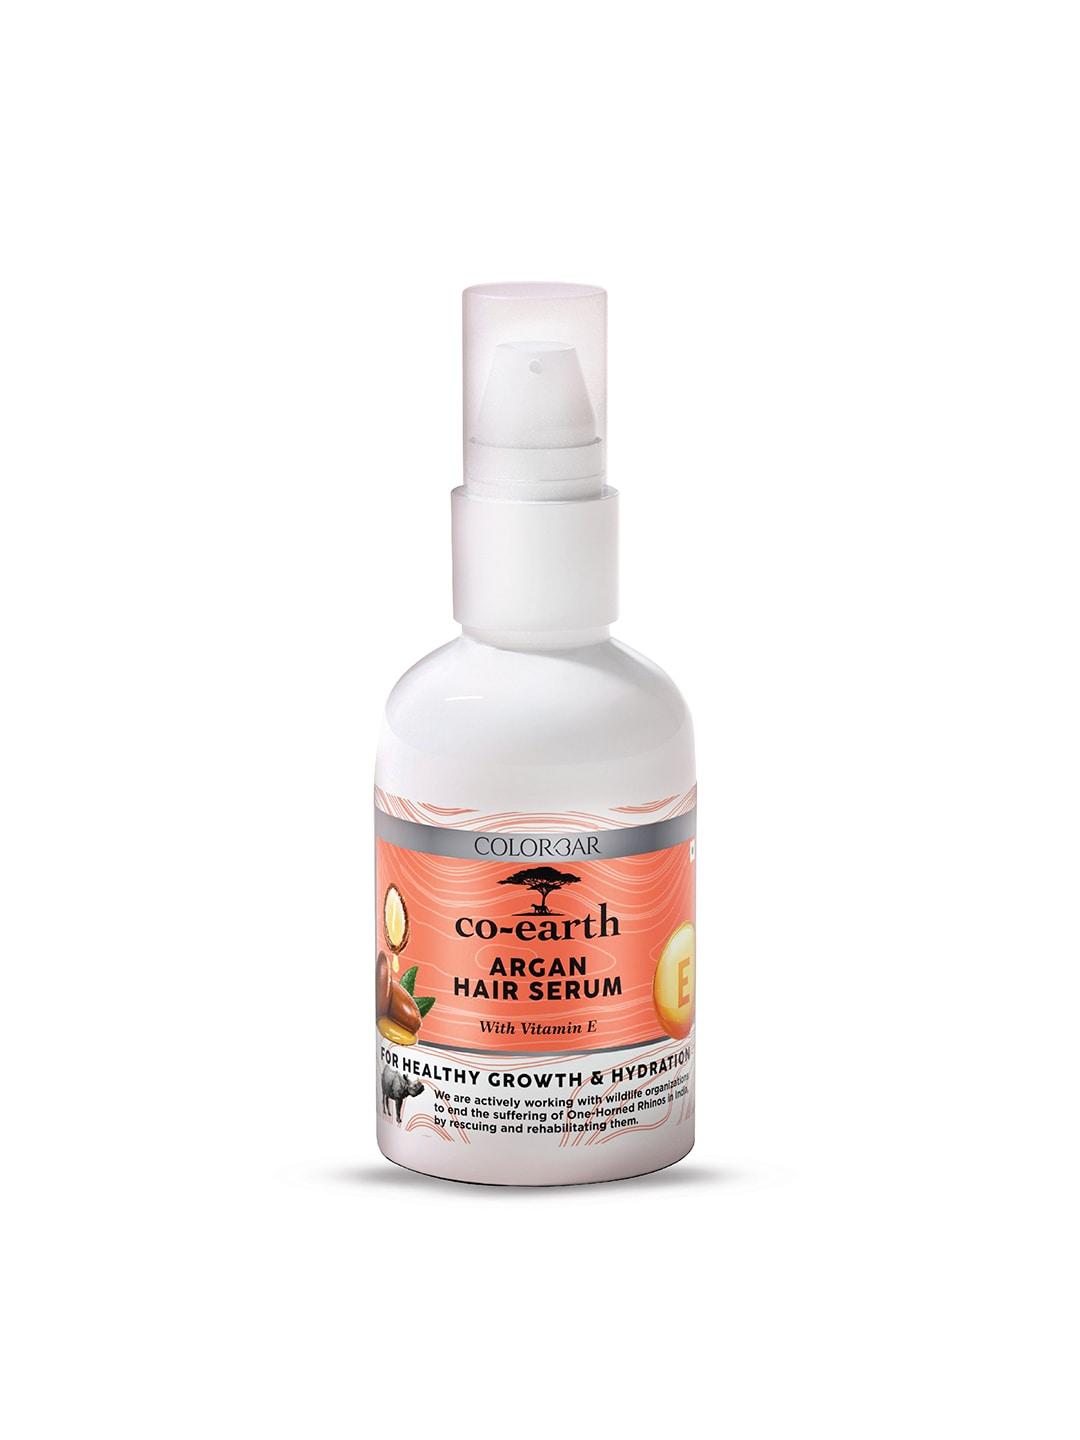 colorbar co-earth argan hair serum with vitamin e for healthy growth & hydration - 100 ml